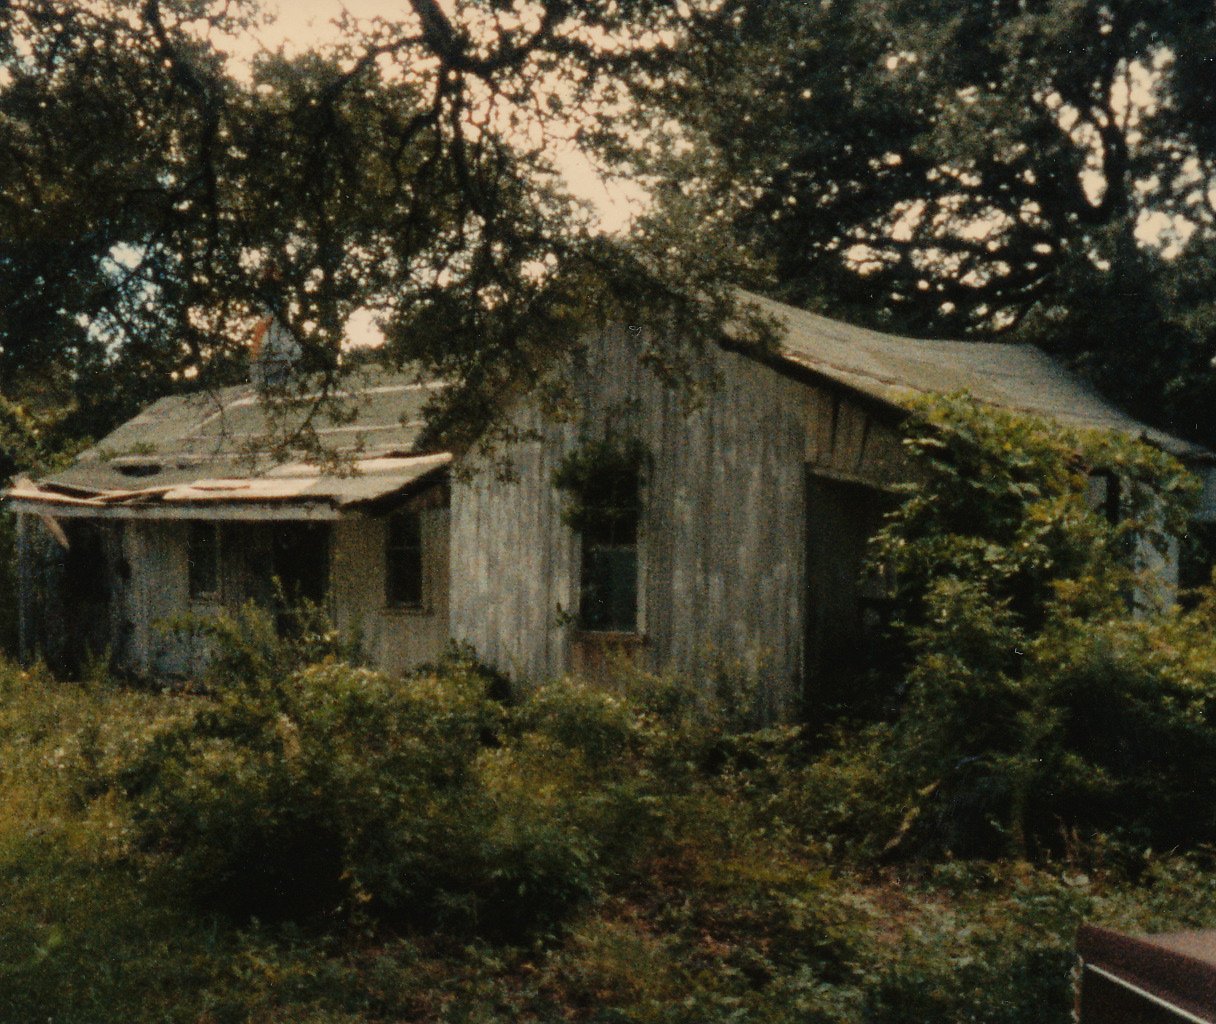 Boo Willis House, taken August 1985 (Copy)